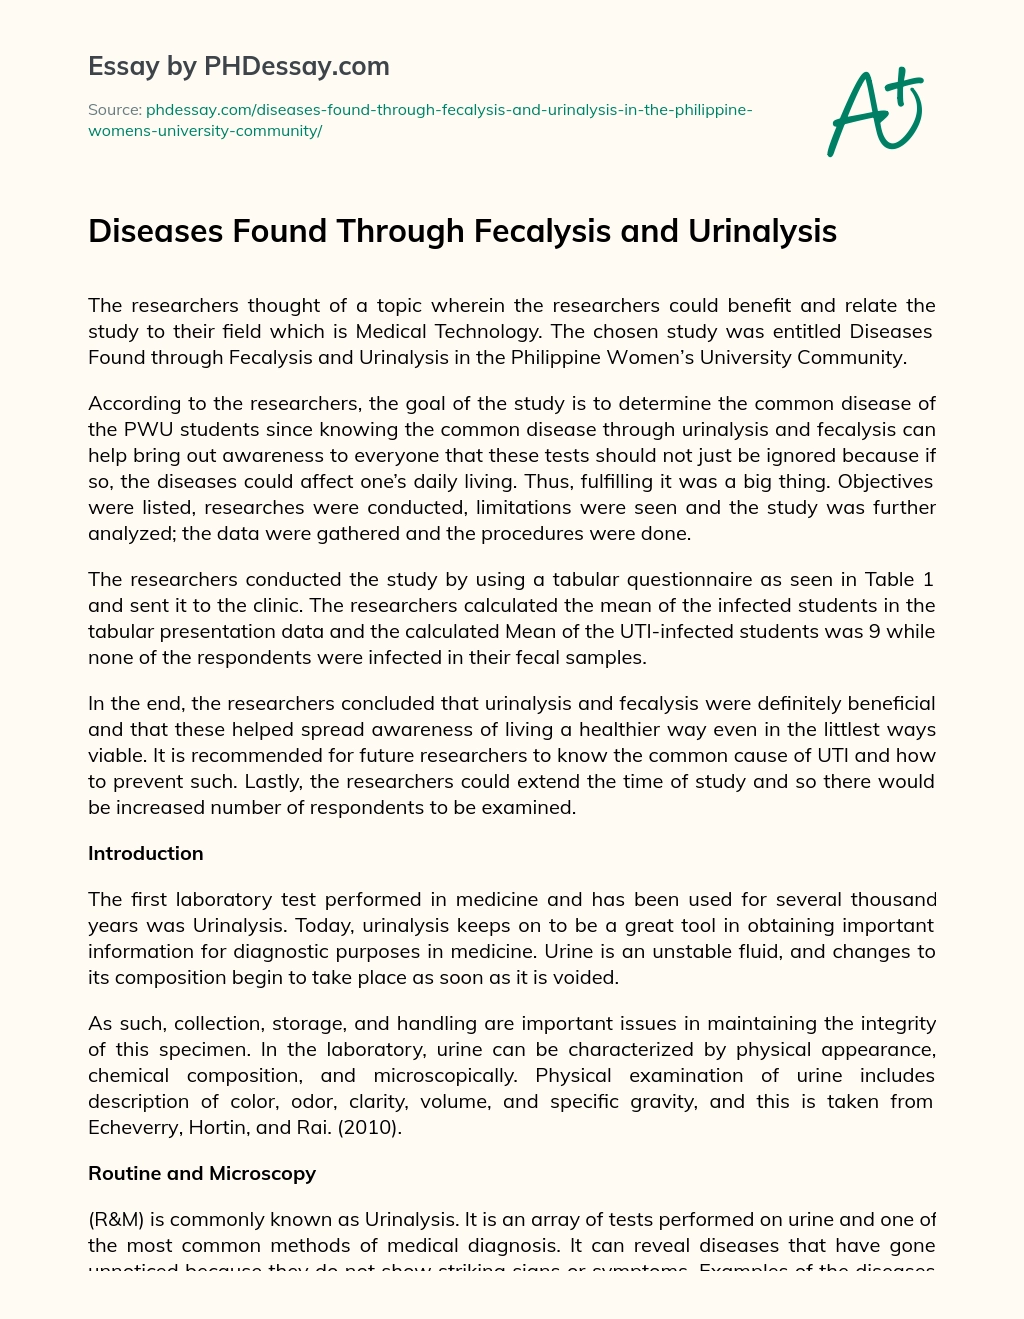 Diseases Found Through Fecalysis and Urinalysis essay